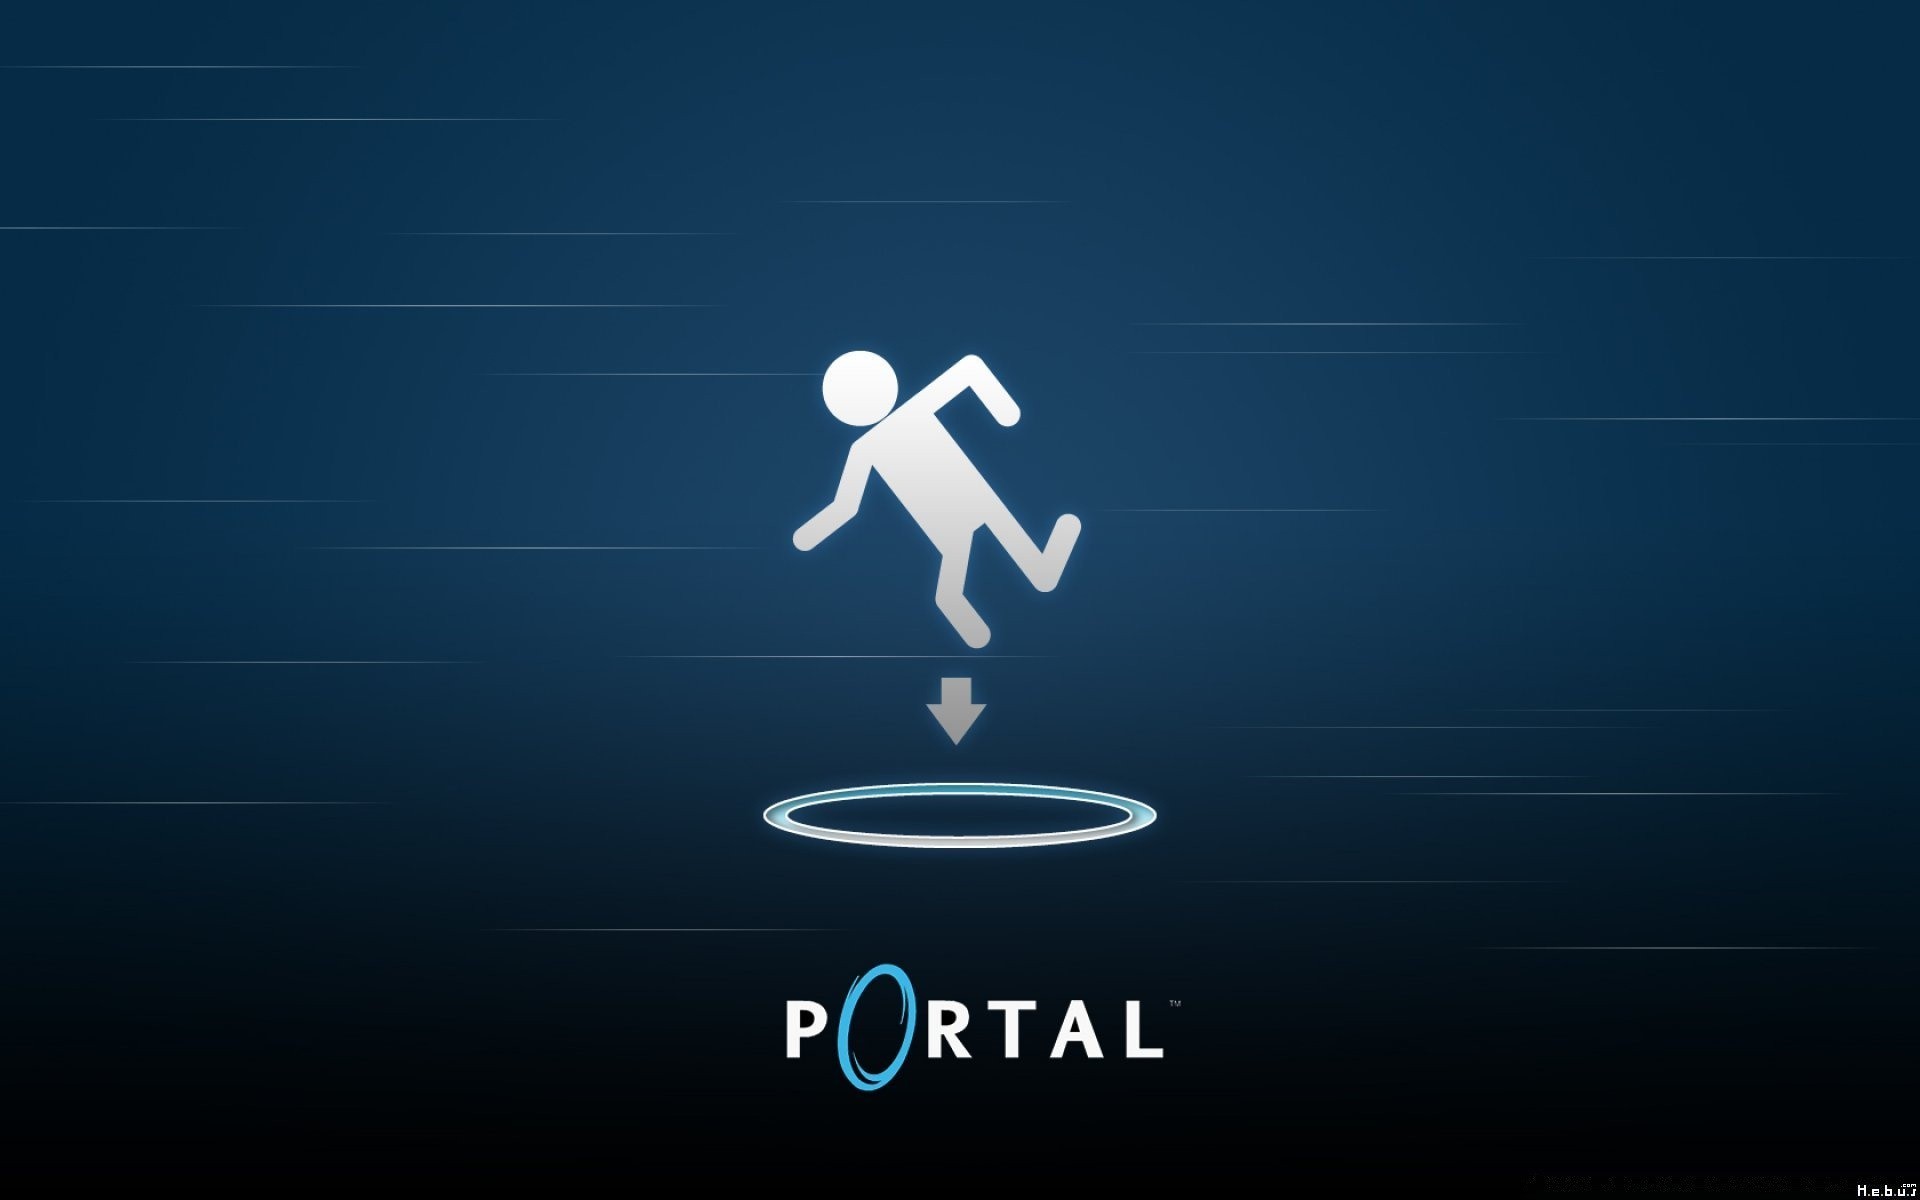 Portal desktop. Портал 1. Портал игра. Игра портал 1. Портал 1 обои.